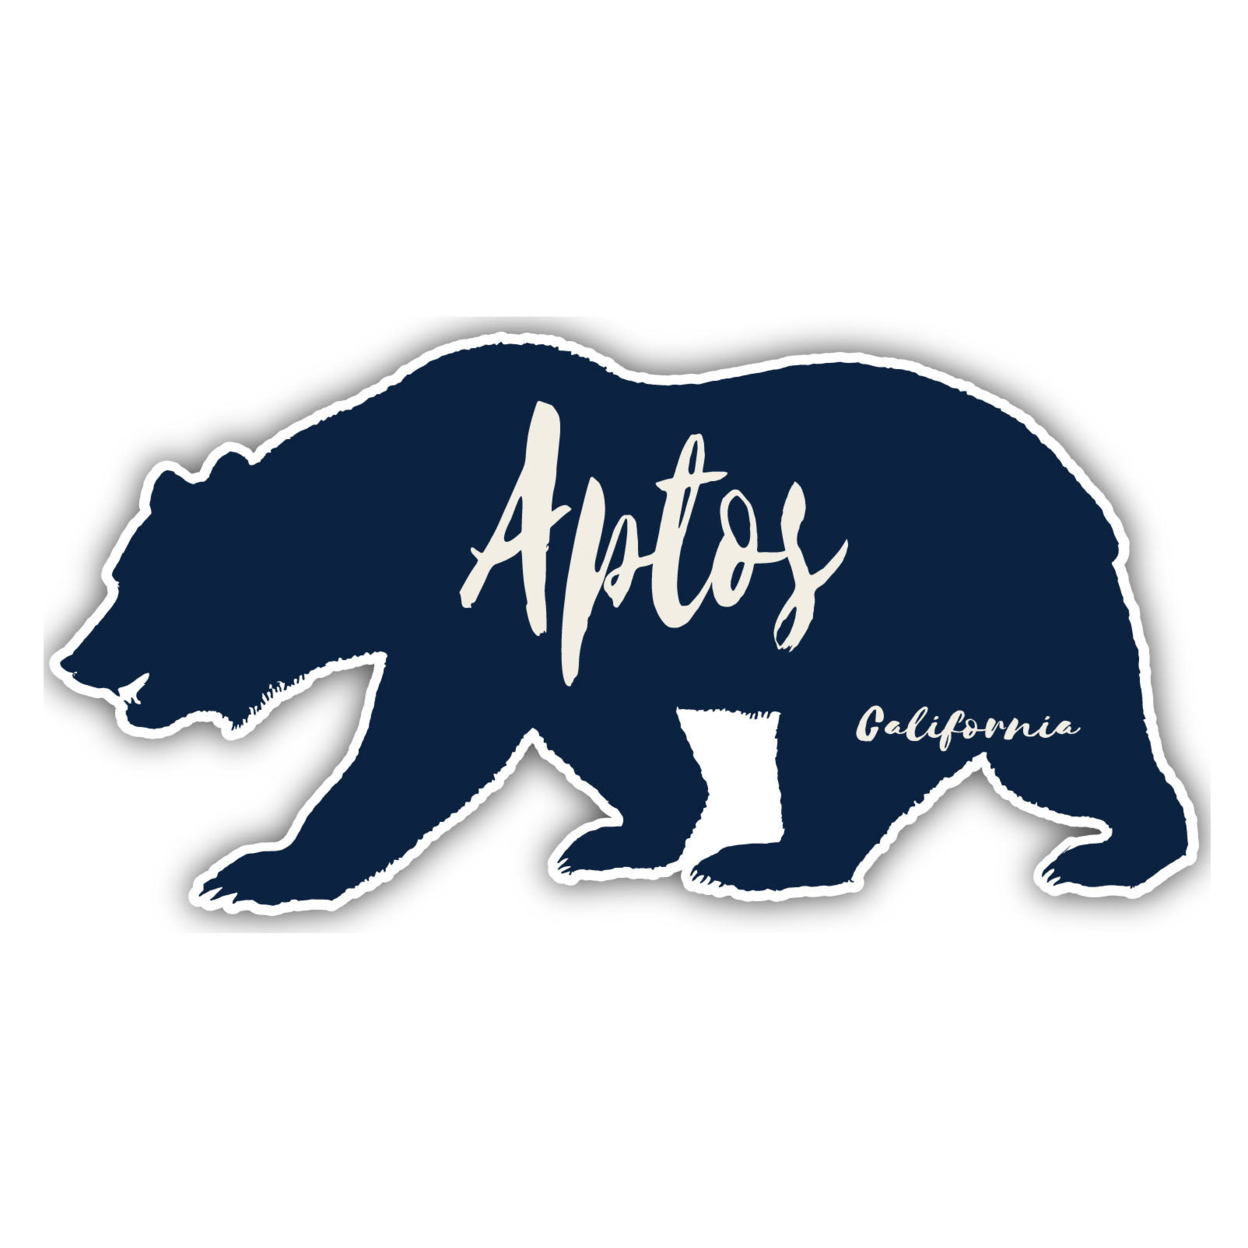 Aptos California Souvenir Decorative Stickers (Choose Theme And Size) - 4-Pack, 12-Inch, Adventures Awaits